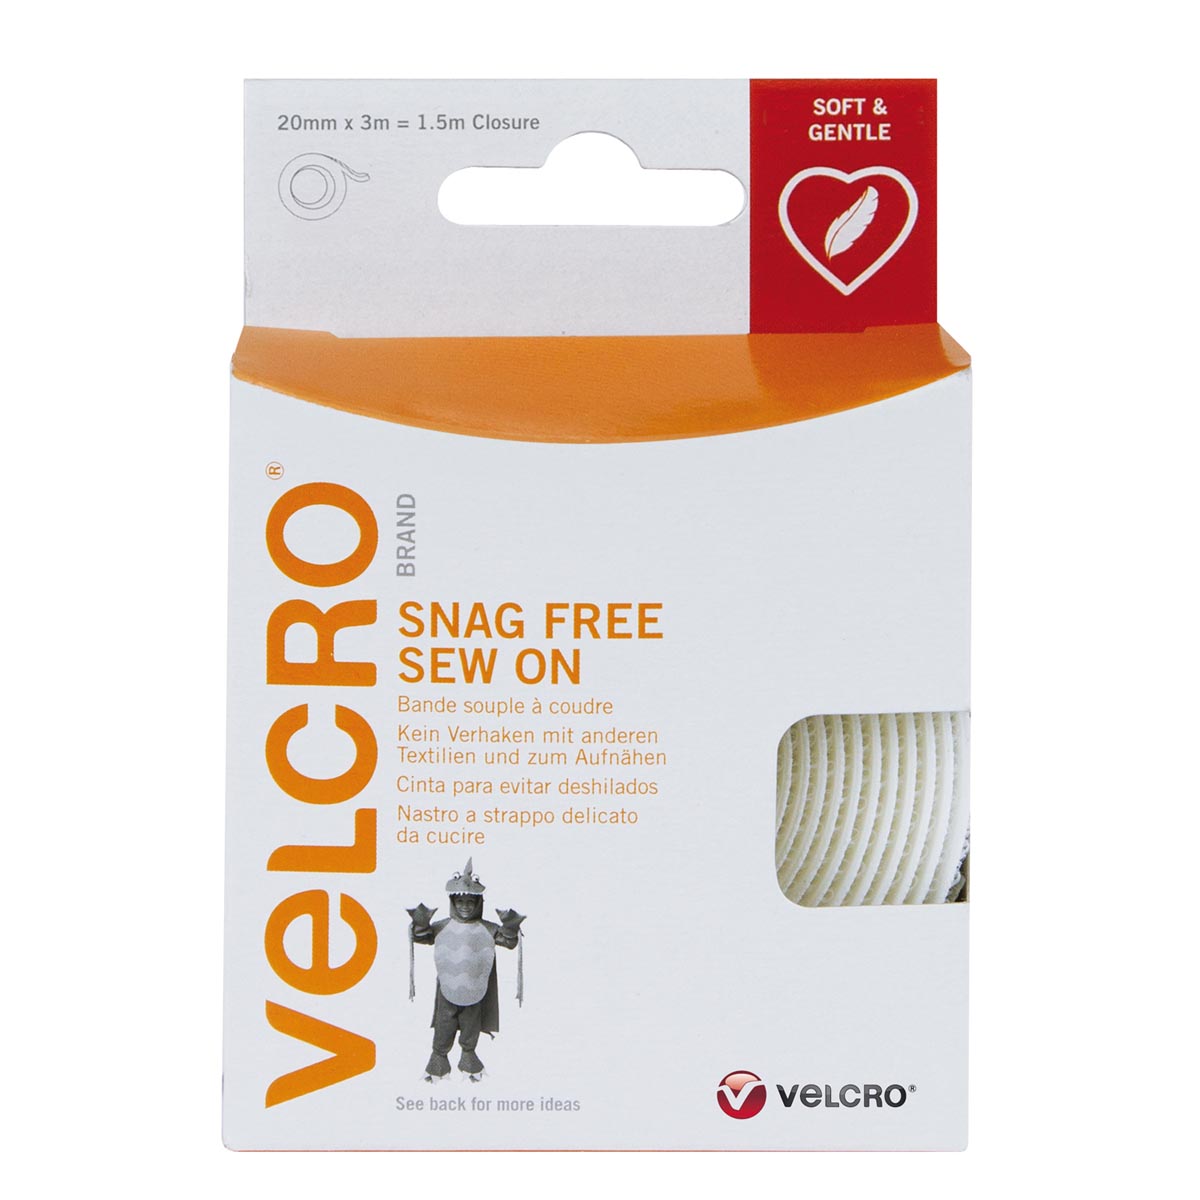 VELCRO® Brand Sew-on Anti-Snag tape 3m x 20mm WHITE